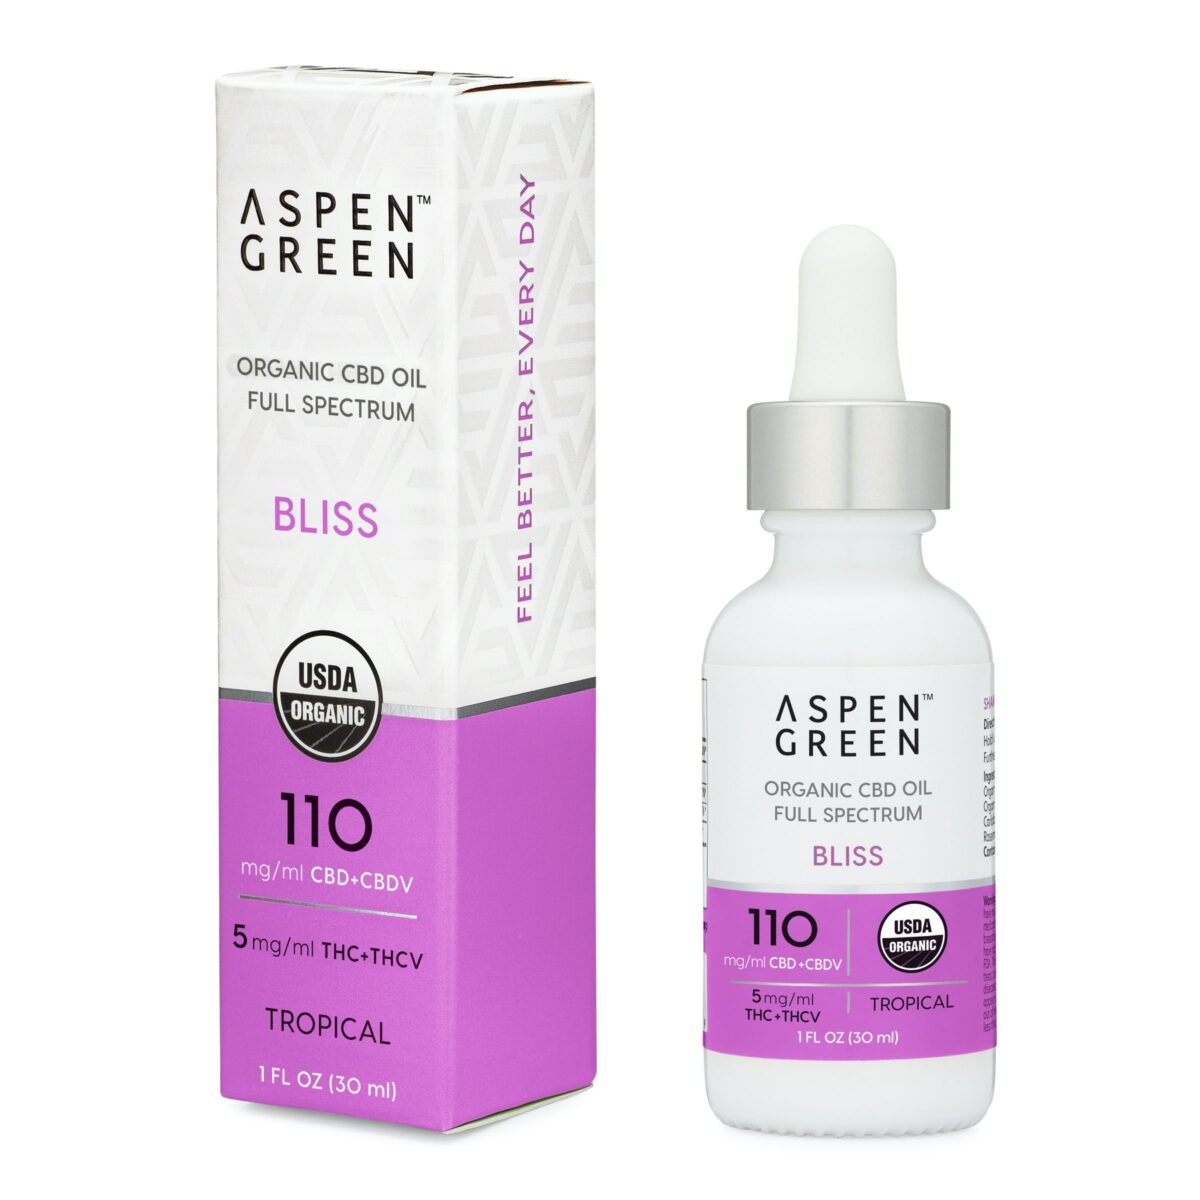 Aspen Green USDA Certified Organic CBD Oil with box, Bliss (110mg/ml CBD), Tropical Flavor